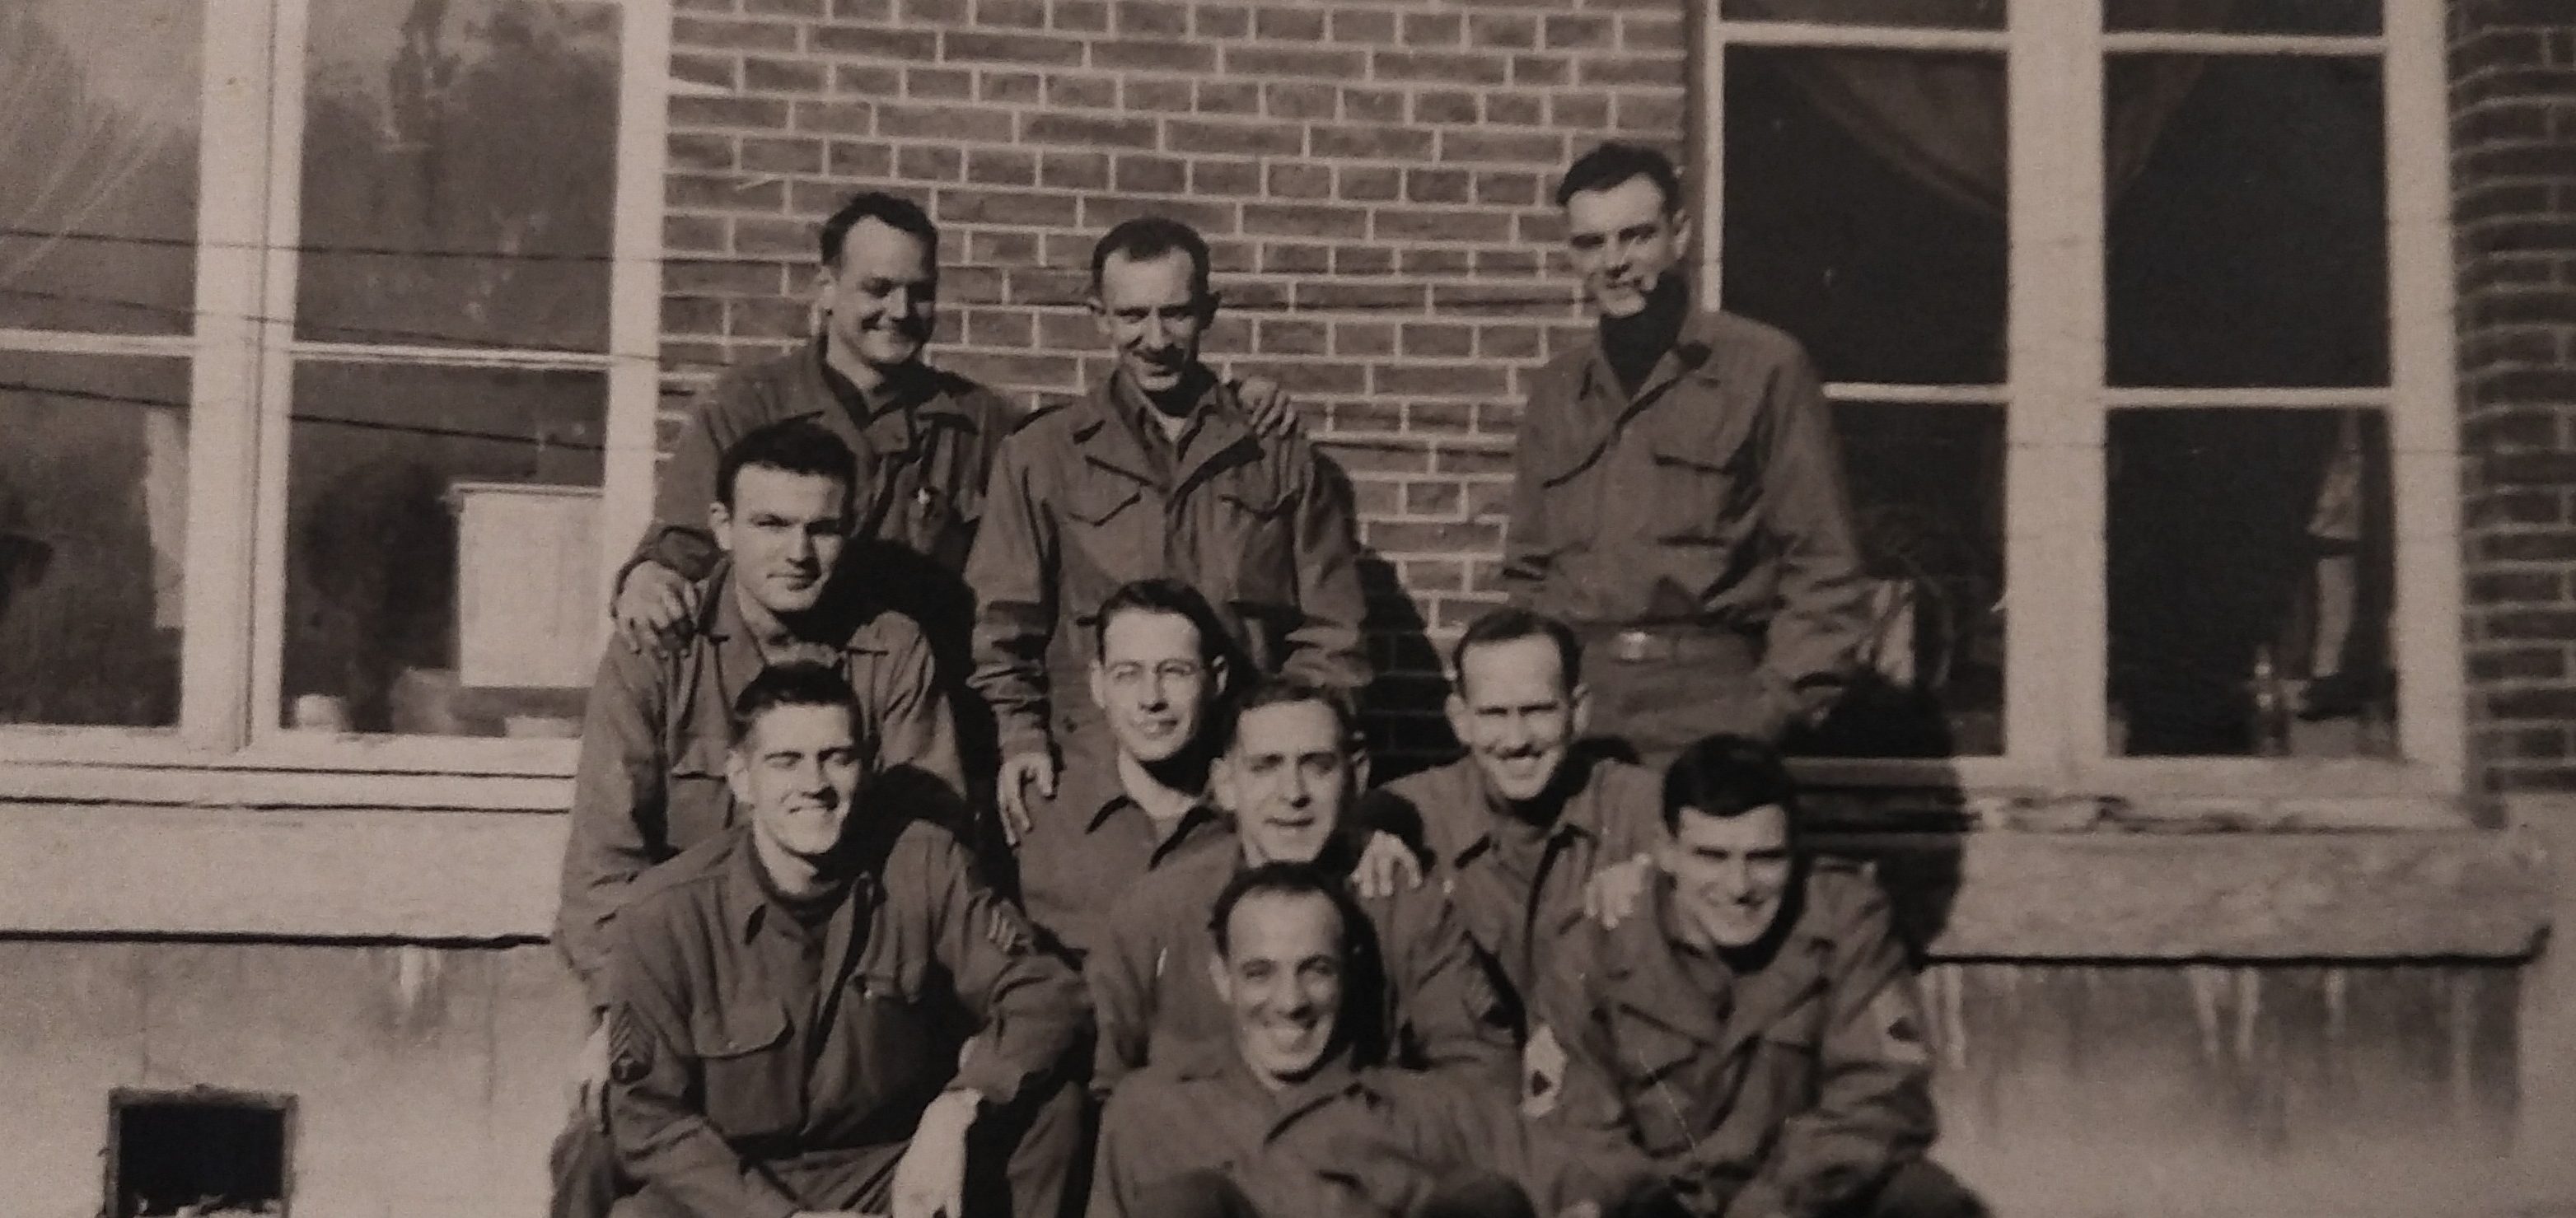 American soldiers in Belgium, 1944. Virginia Kruta/The Daily Caller